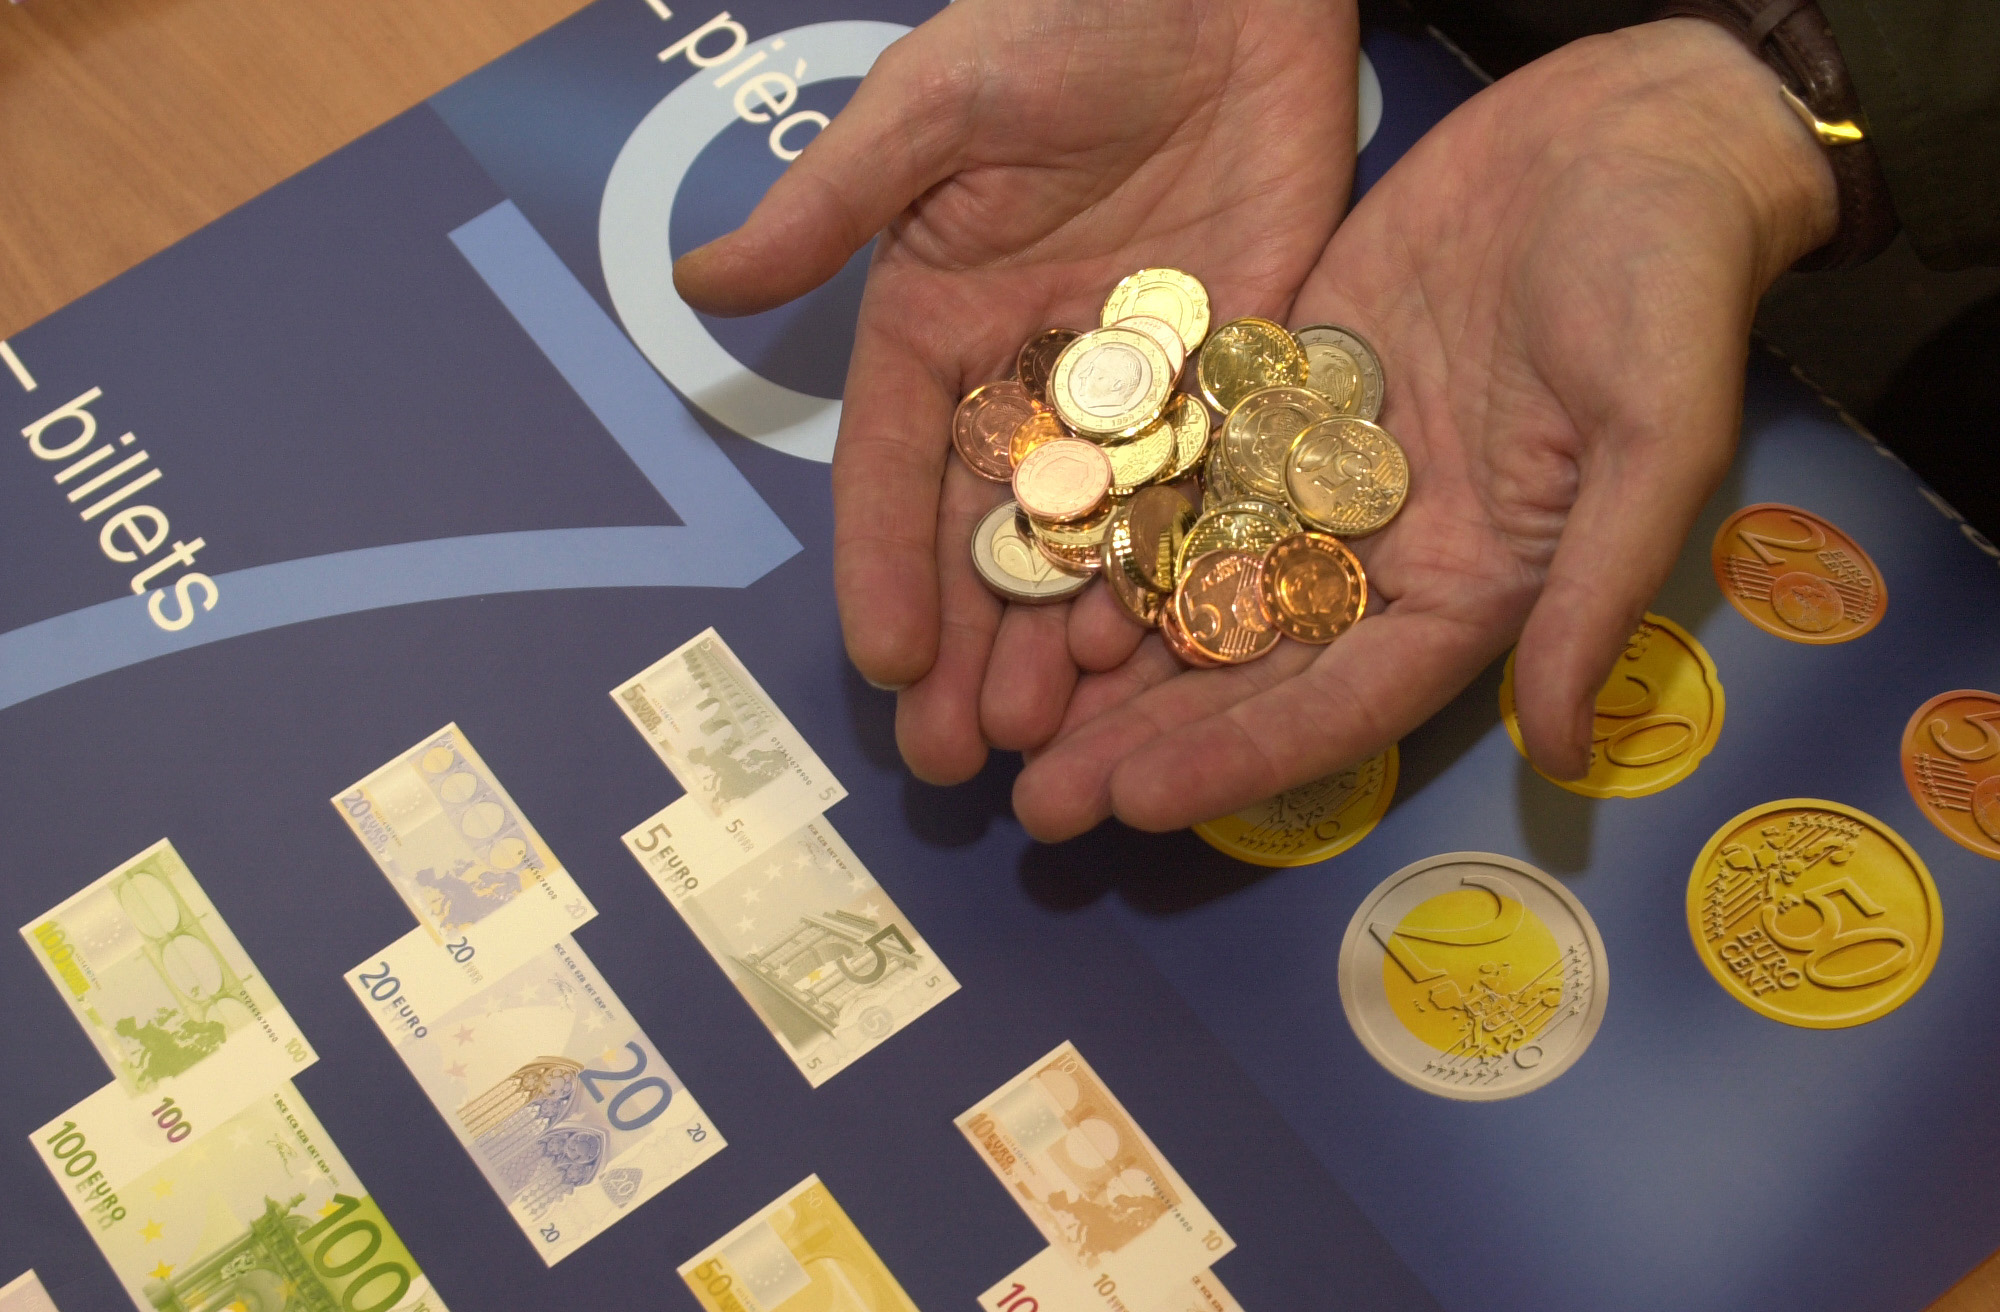 EU Introduces New 50 Euro Note